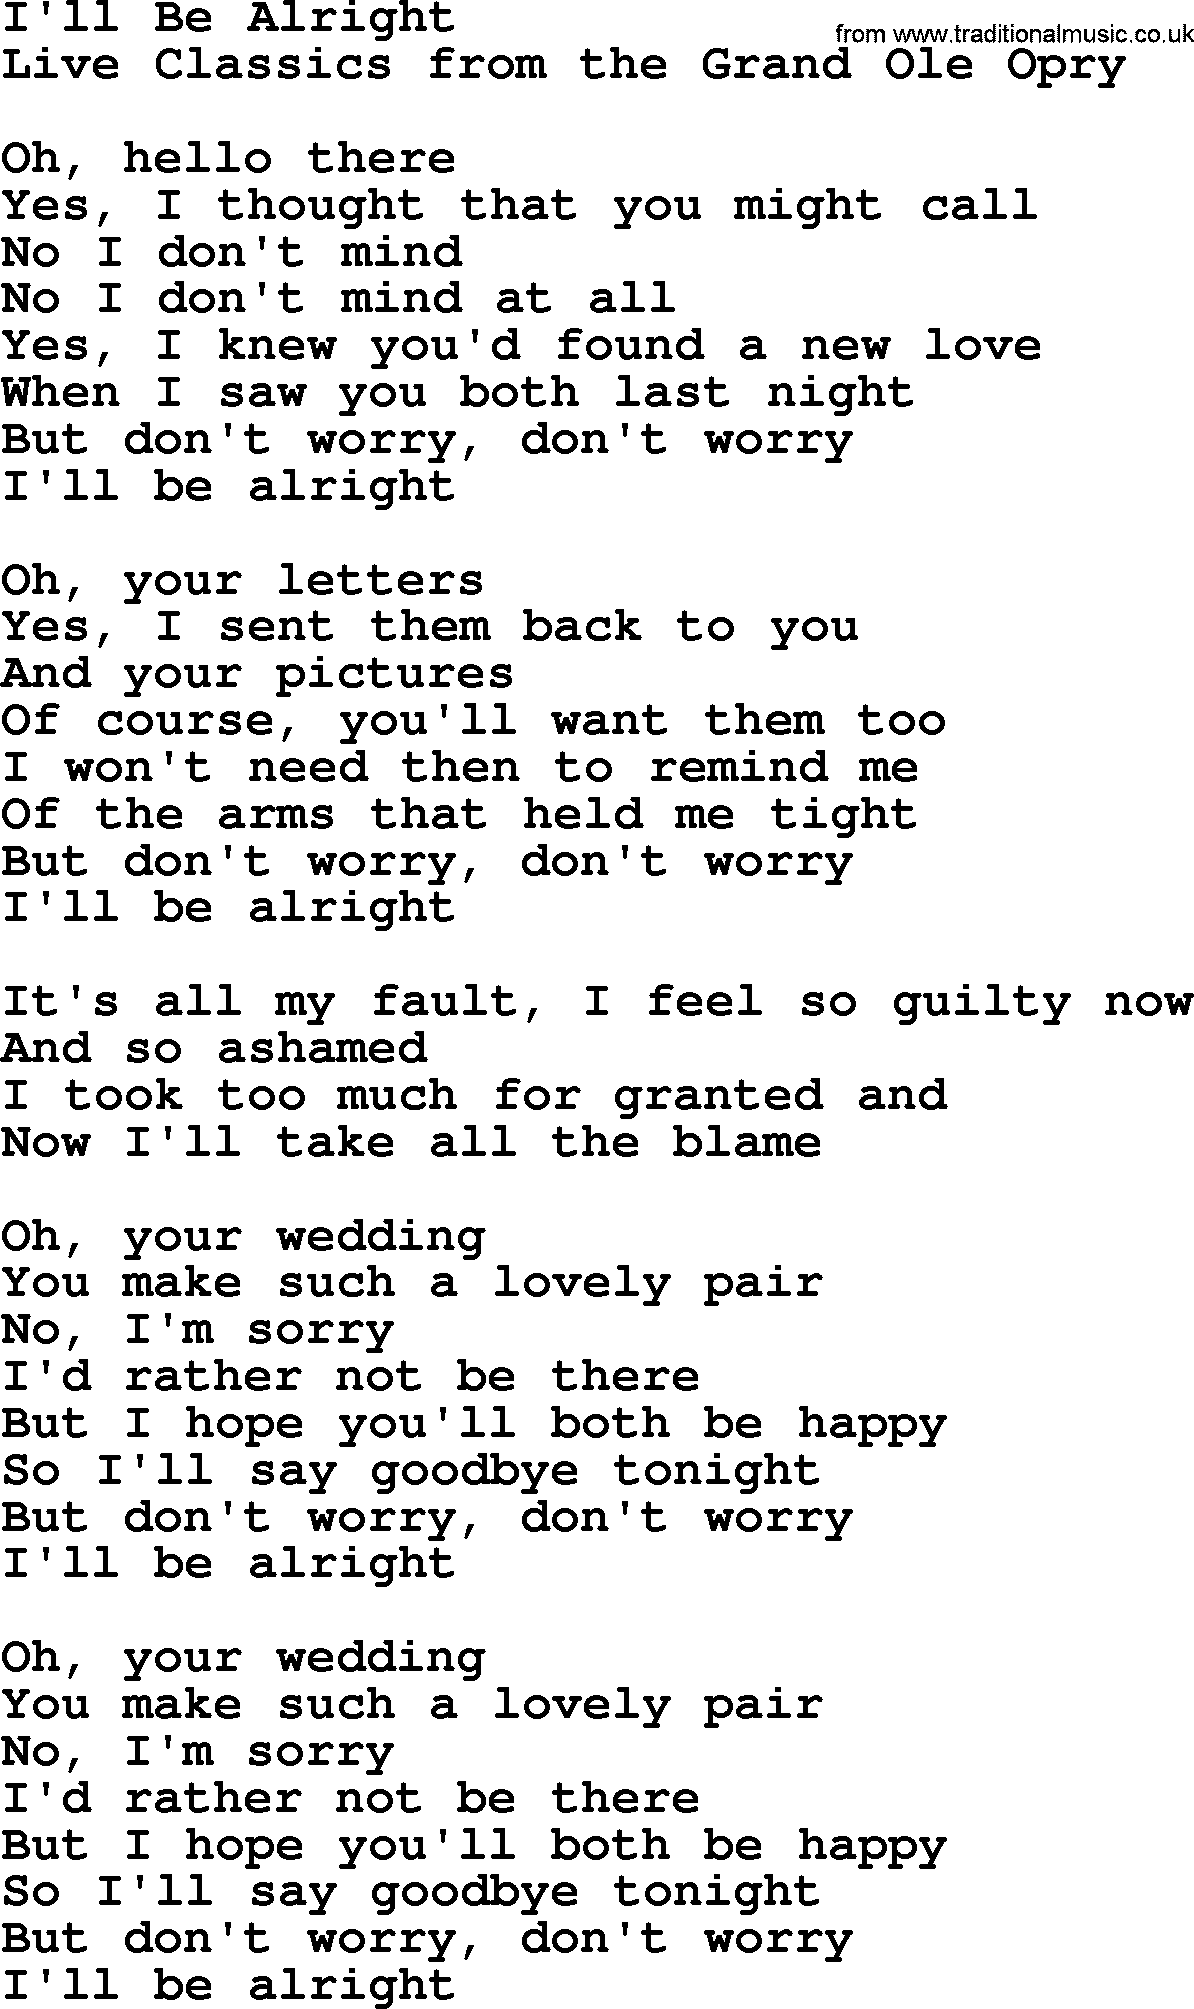 Be alright lyrics